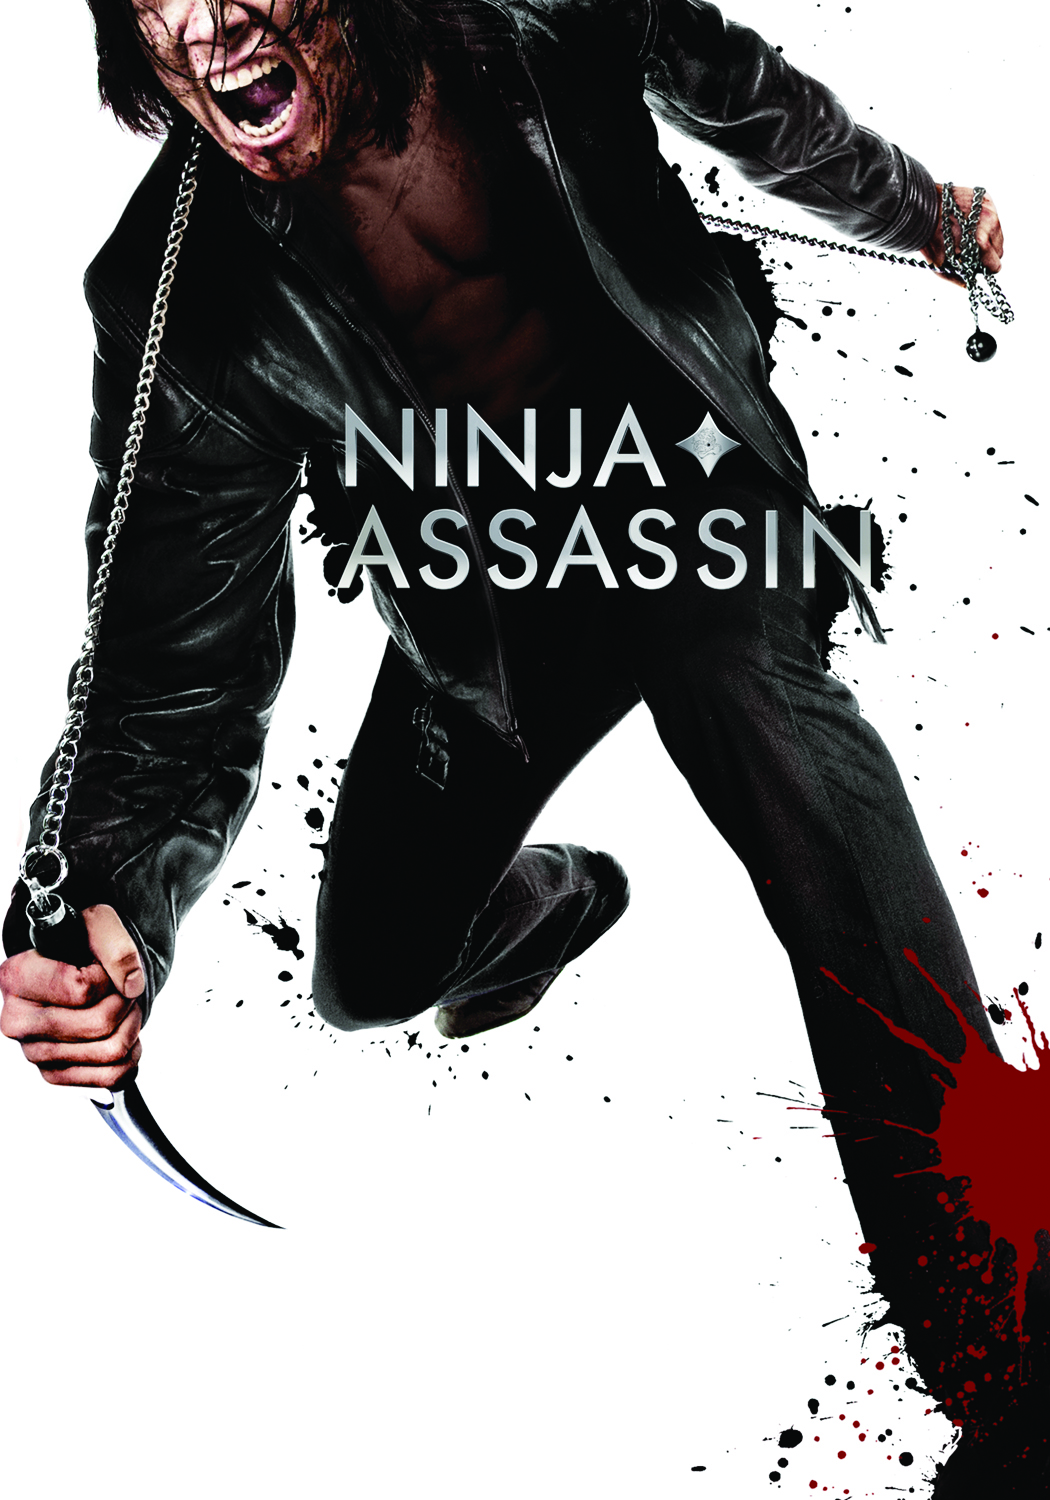 Whatever Happened To The Ninja Assassin Cast?